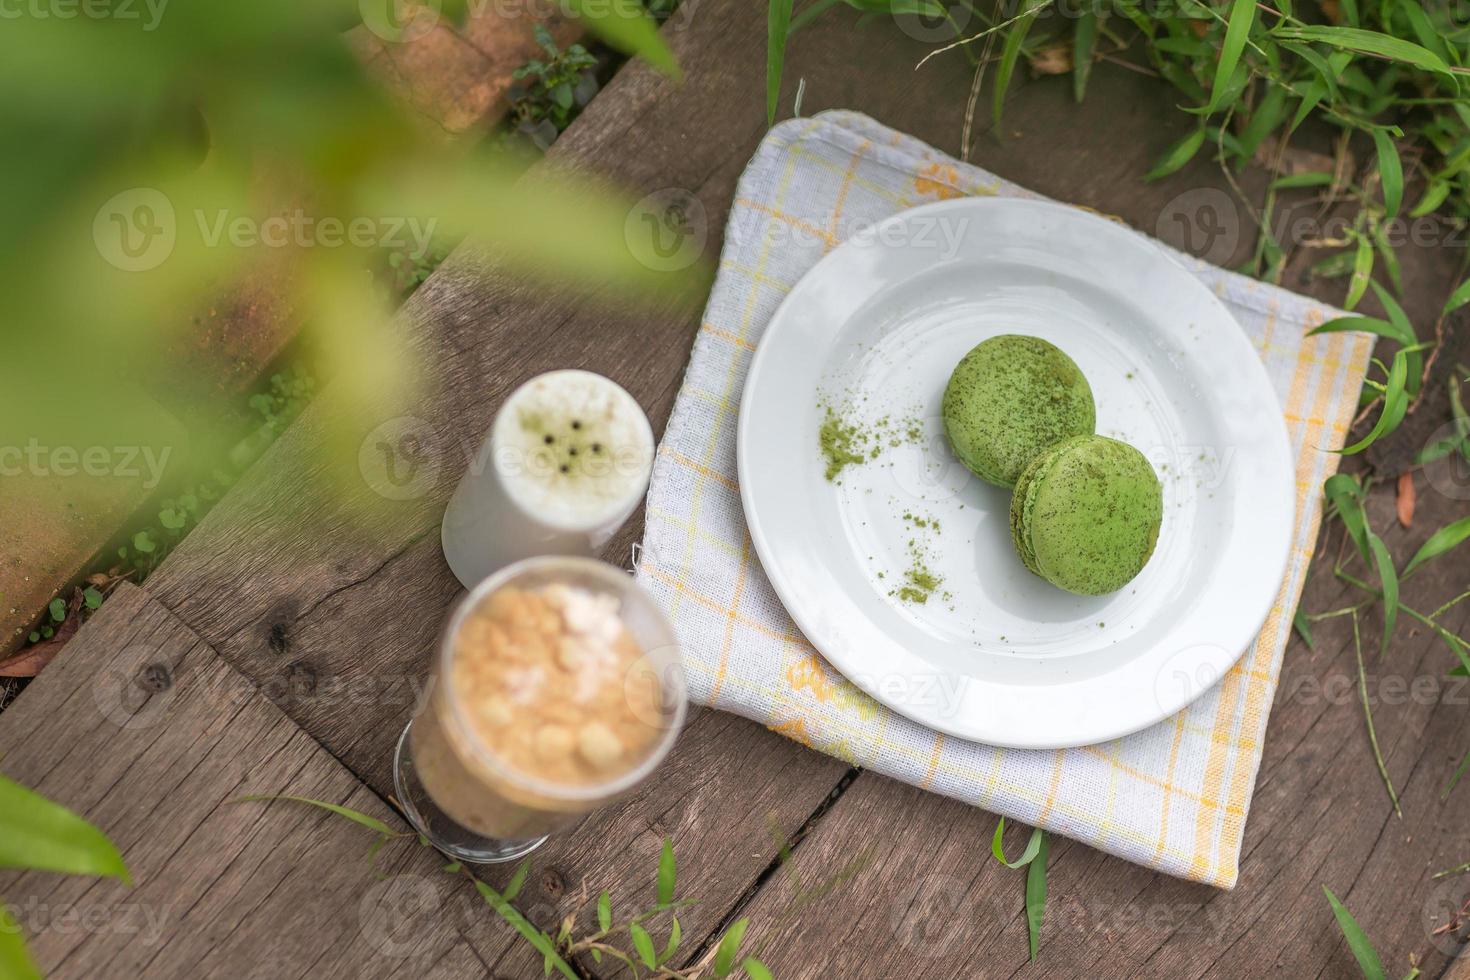 Macarons de té verde - imagen de stock foto